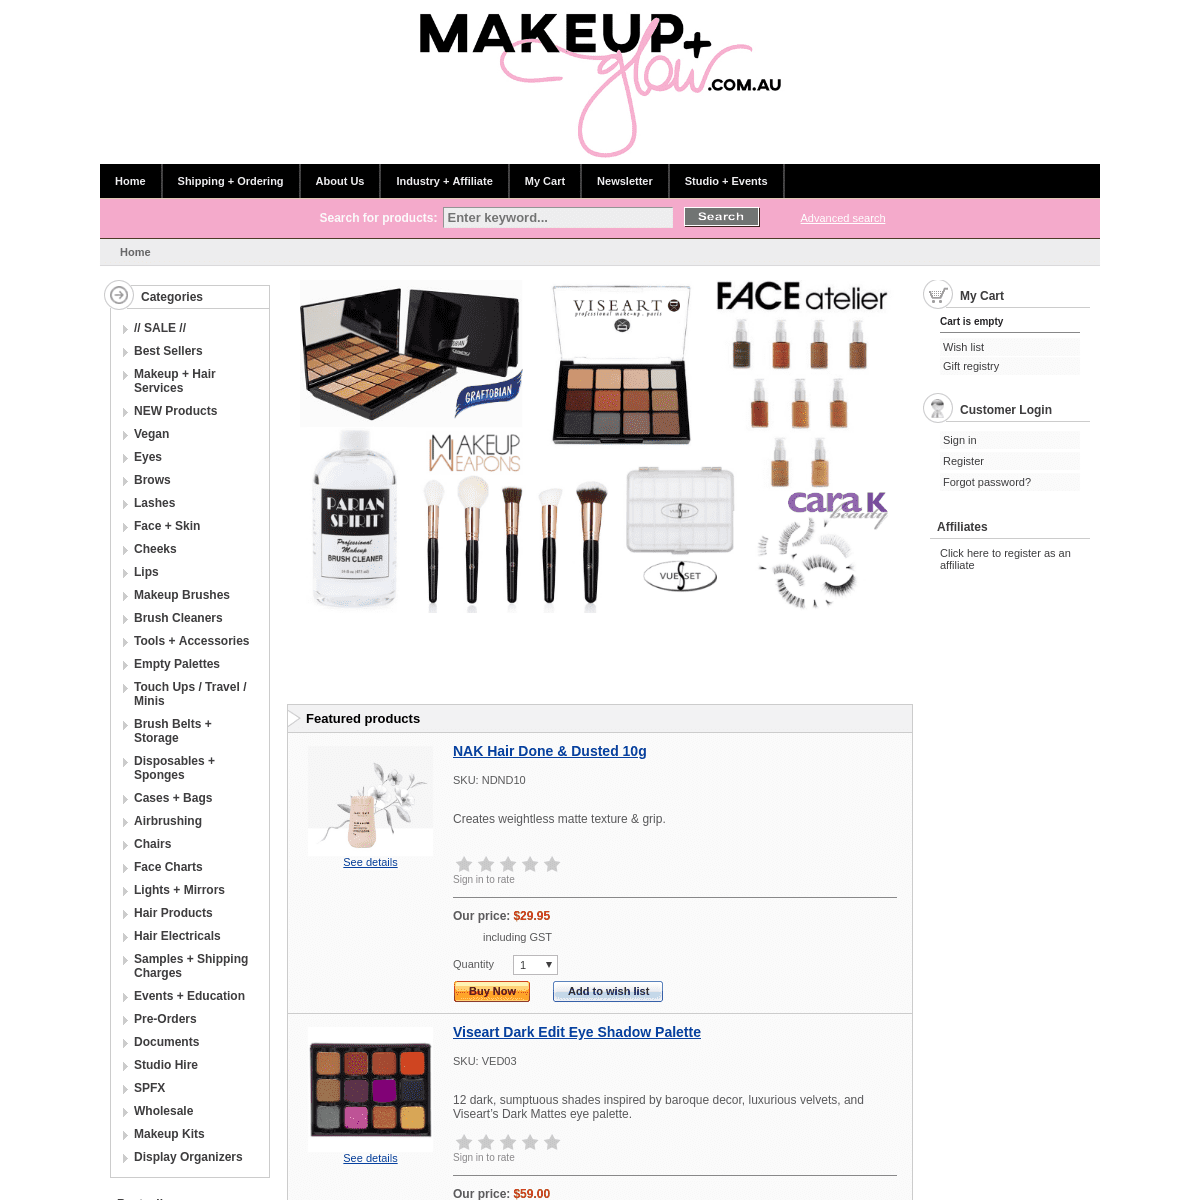 A complete backup of makeupandglow.com.au